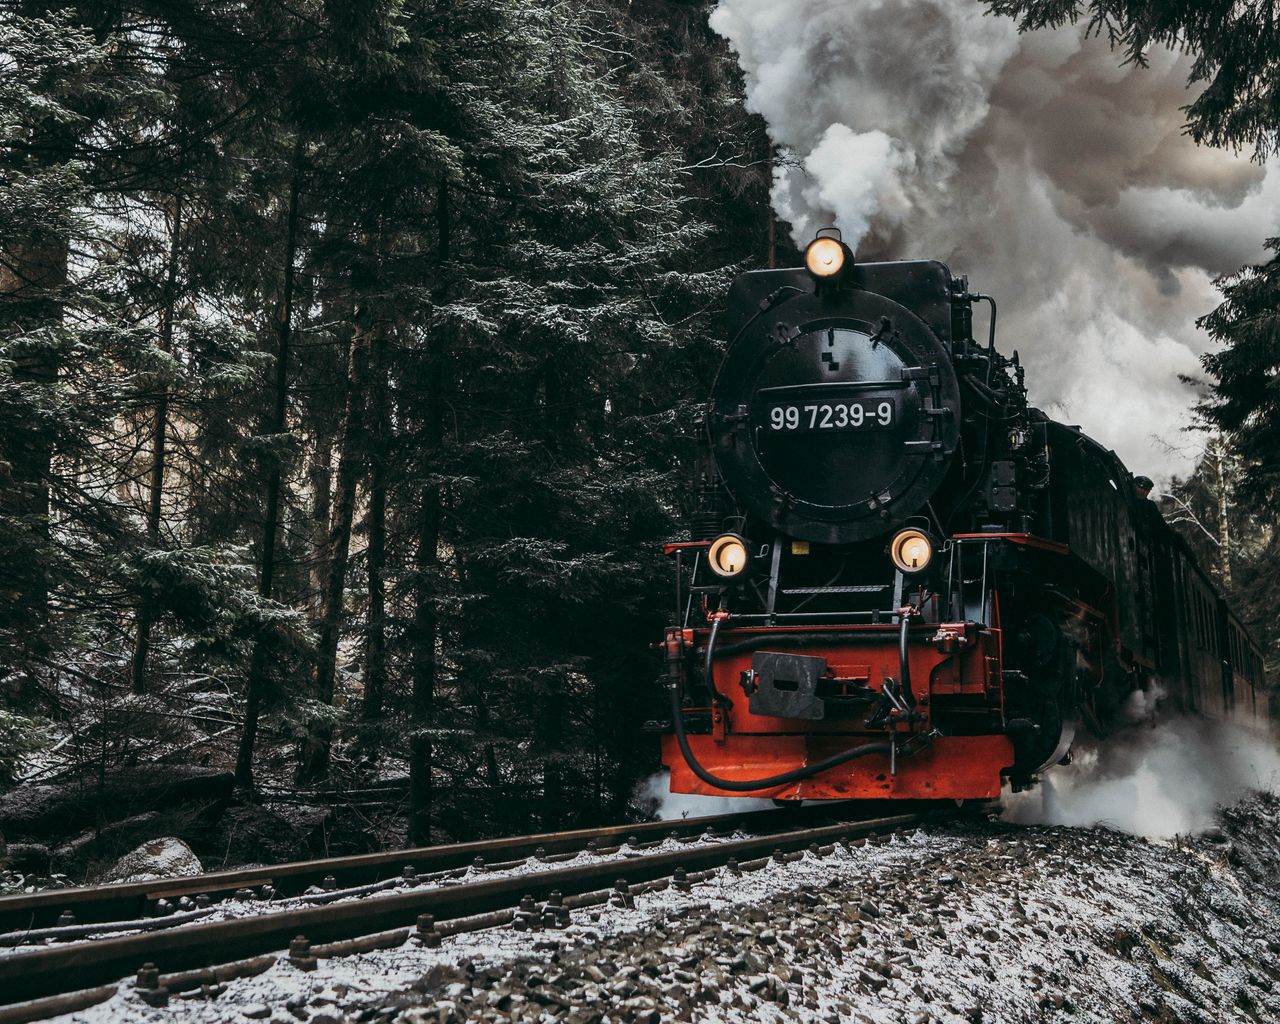 Download wallpaper 1280x1024 steam engine, train, smoke, rails, forest  standard 5:4 hd background